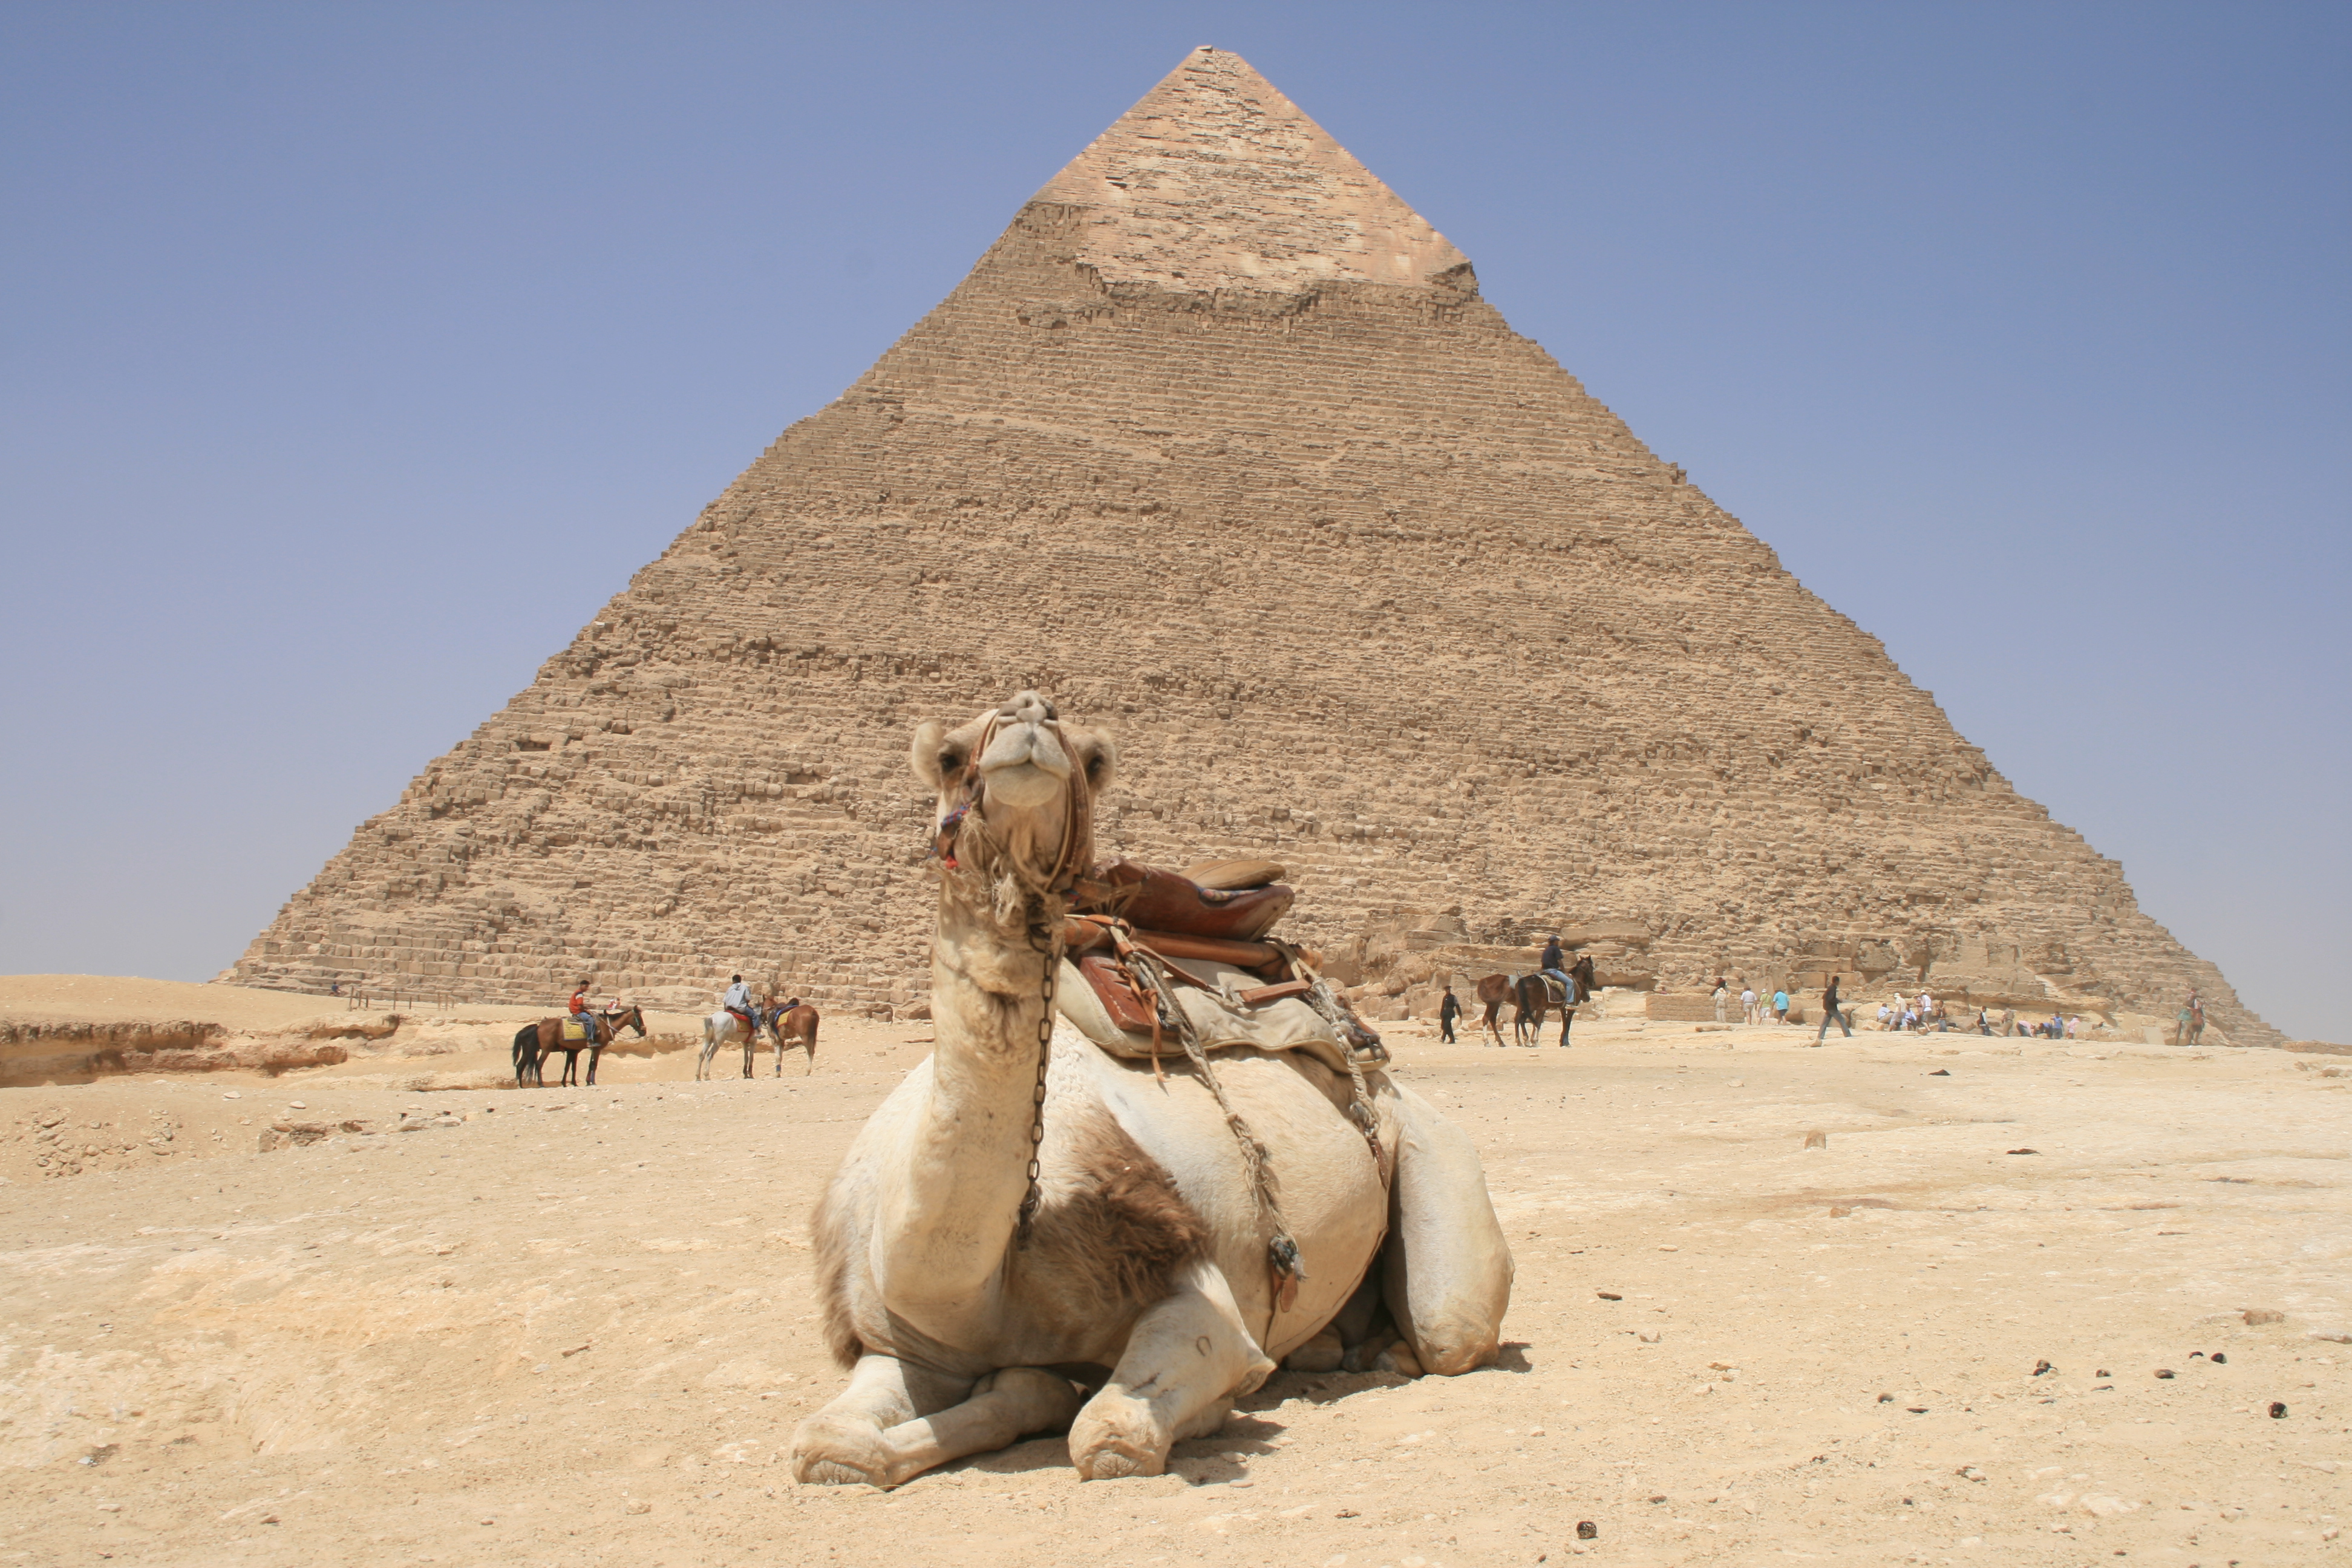 Giza Camel and Pyramid